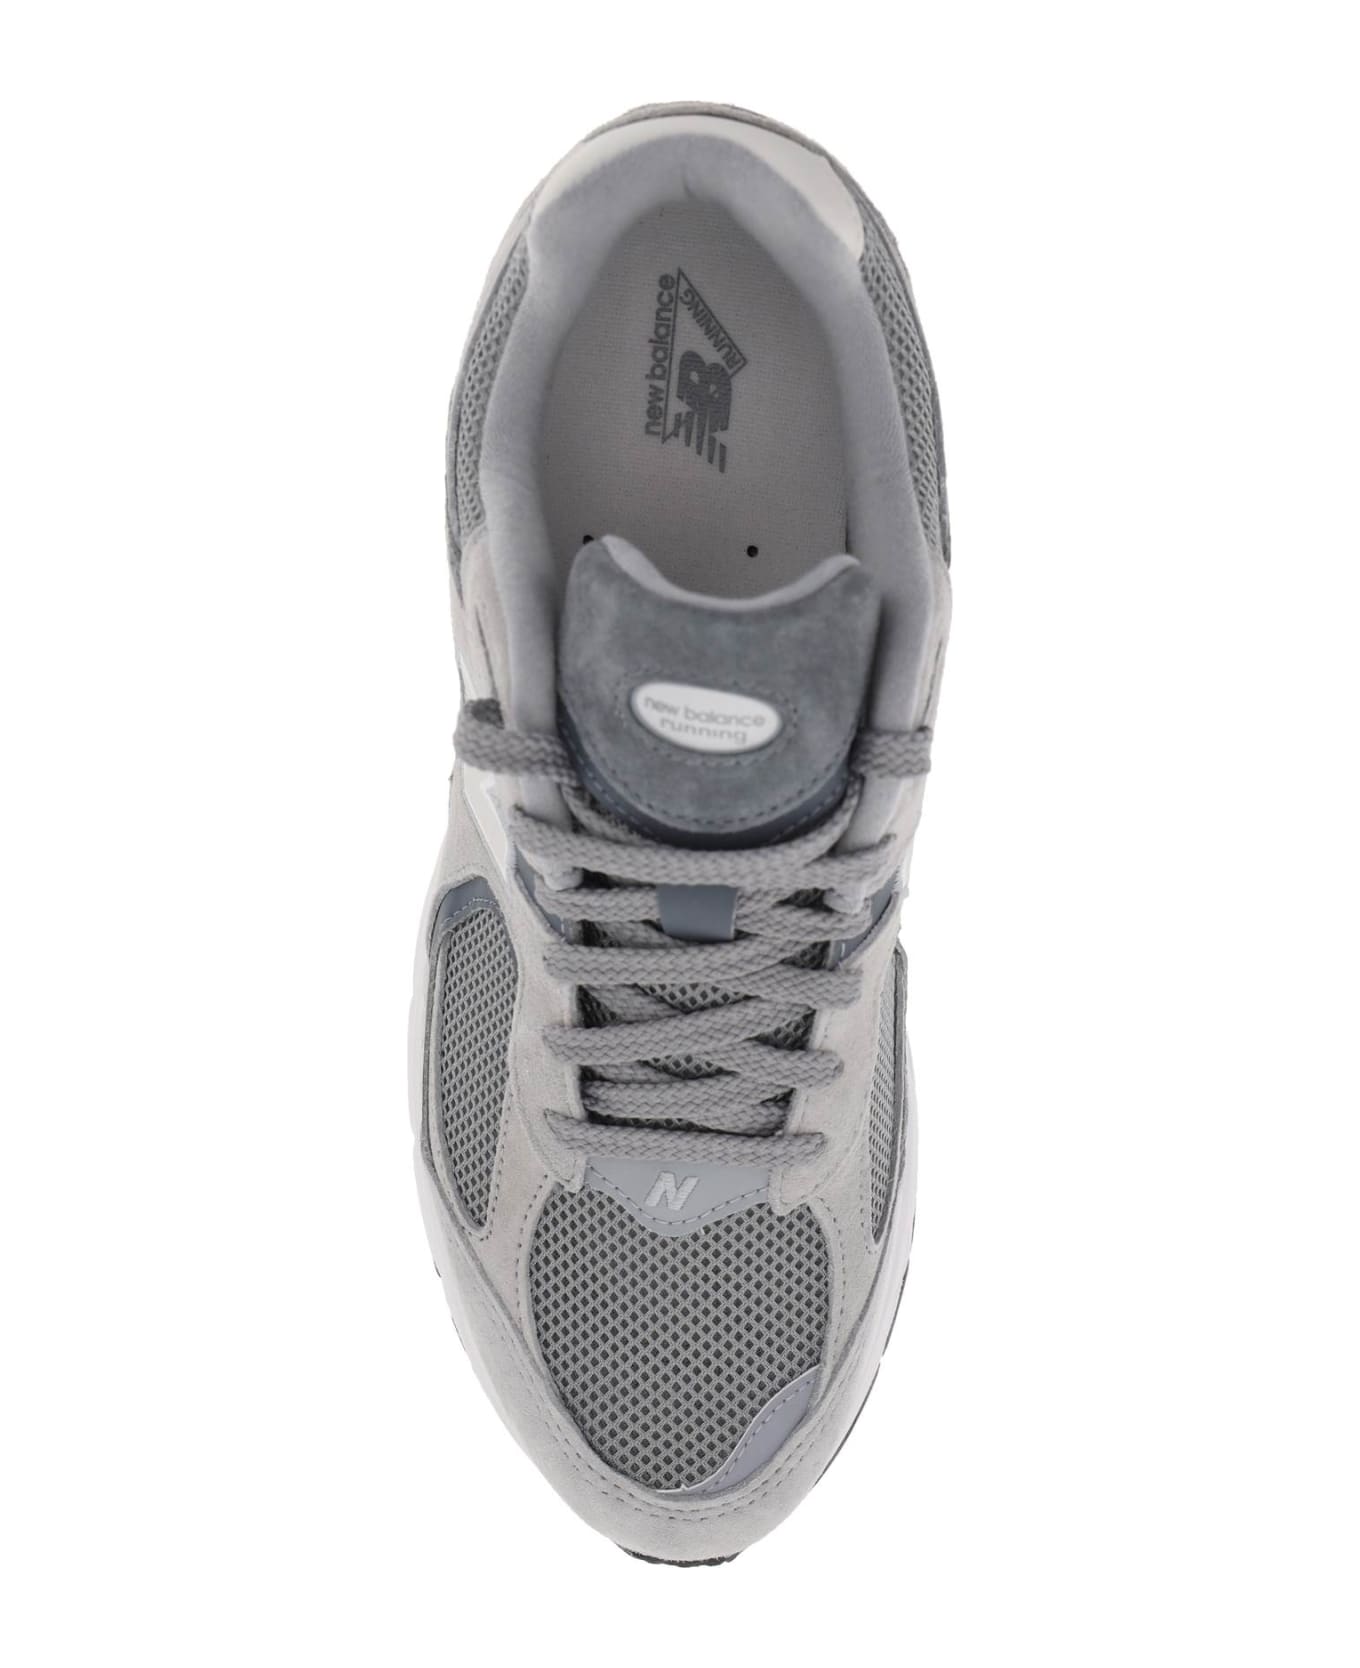 New Balance 2002r Sneakers - STEEL (Grey)